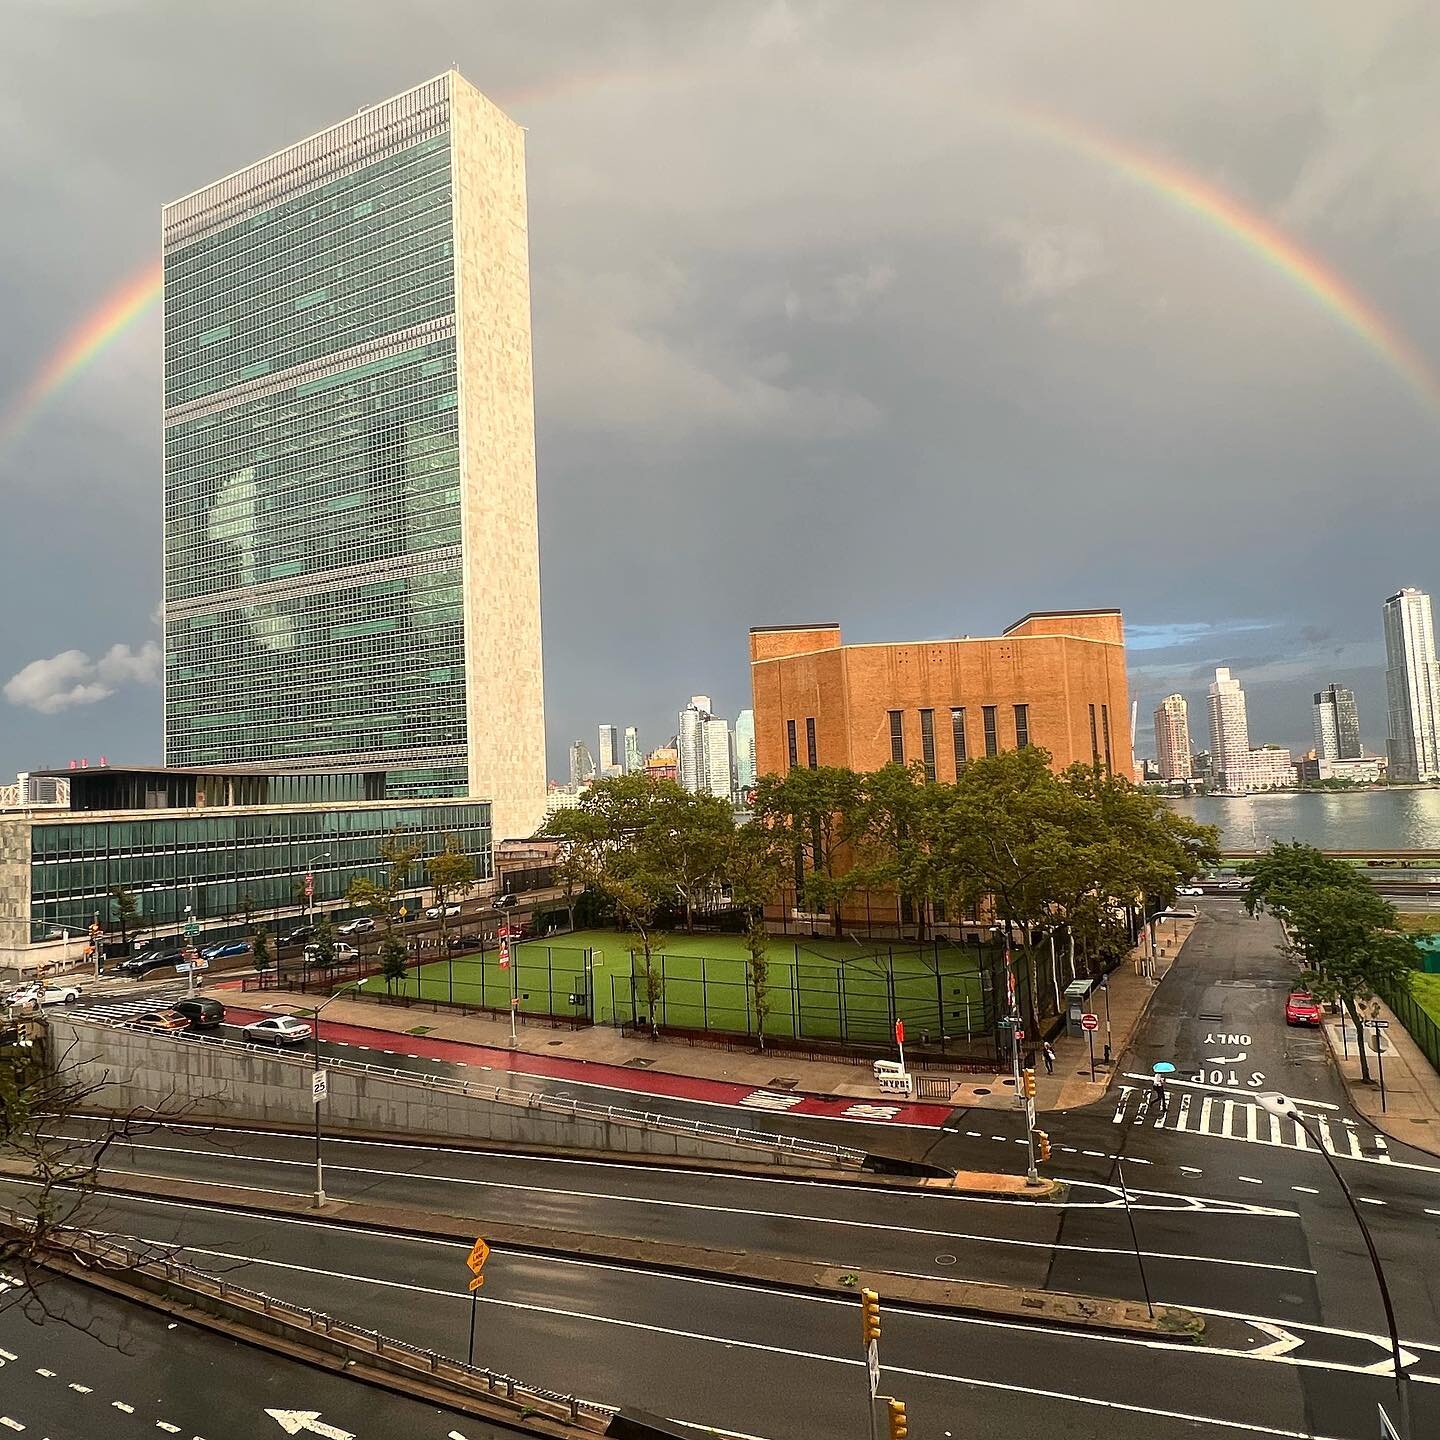 Yesterday&rsquo;s rainbow over the UN.
9.11.2023

#rainbow #911 #newyorkcity #nyc #newyorkphotography #unitednations